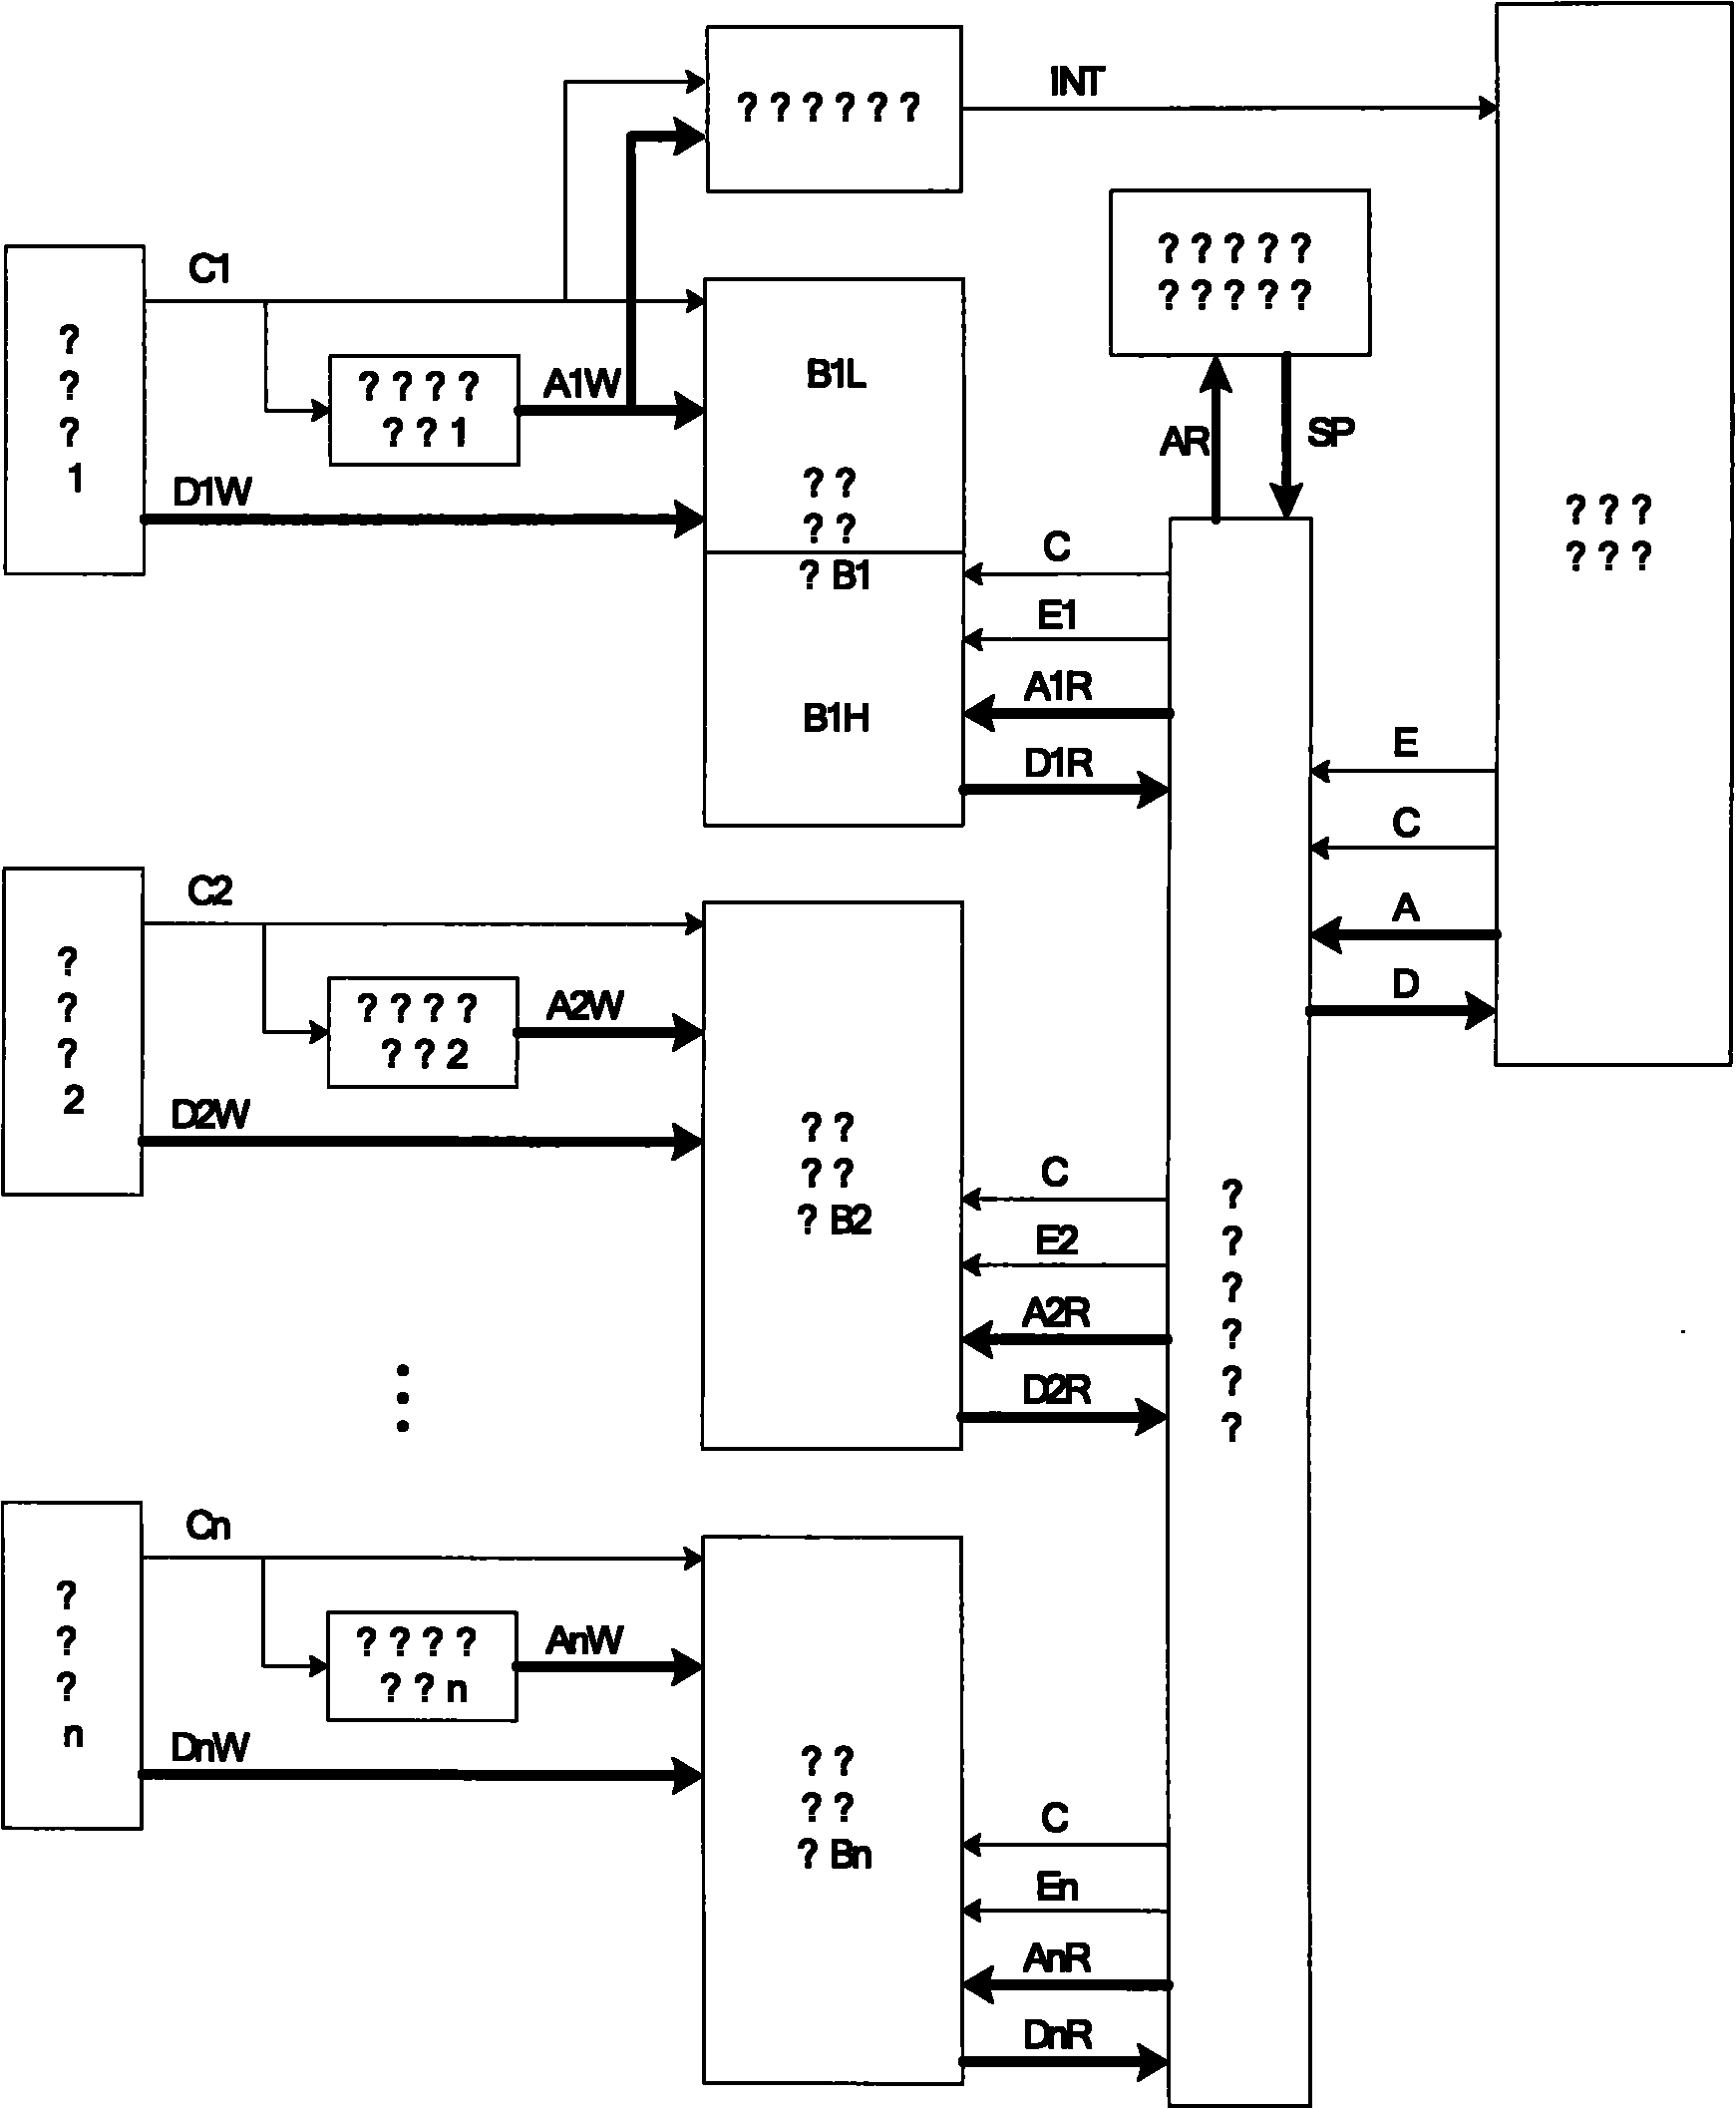 Single-interrupt real-time data transmission method based on FPGA (Field Programmable Gate Array)